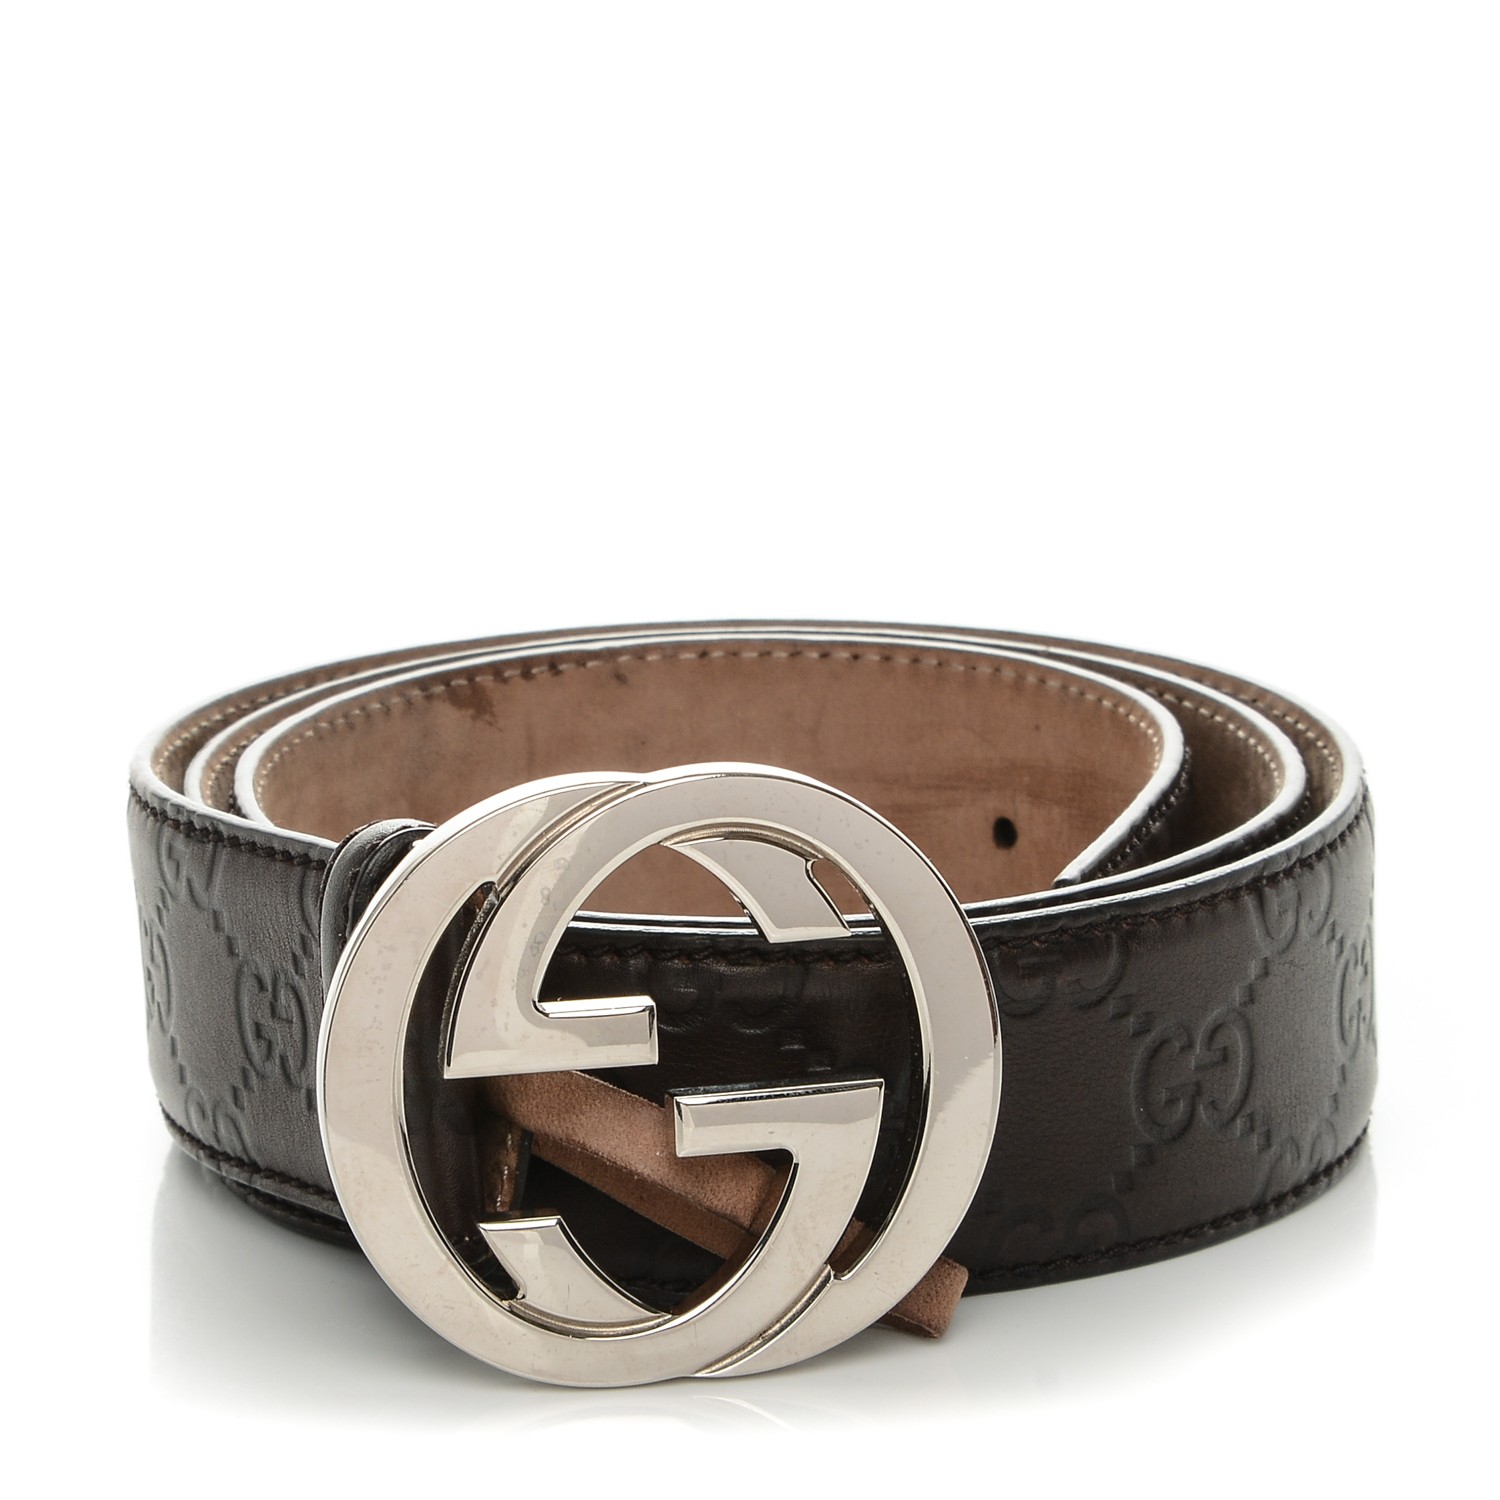 GUCCI Guccissima Interlocking G Belt 95 38 Chocolate 187595